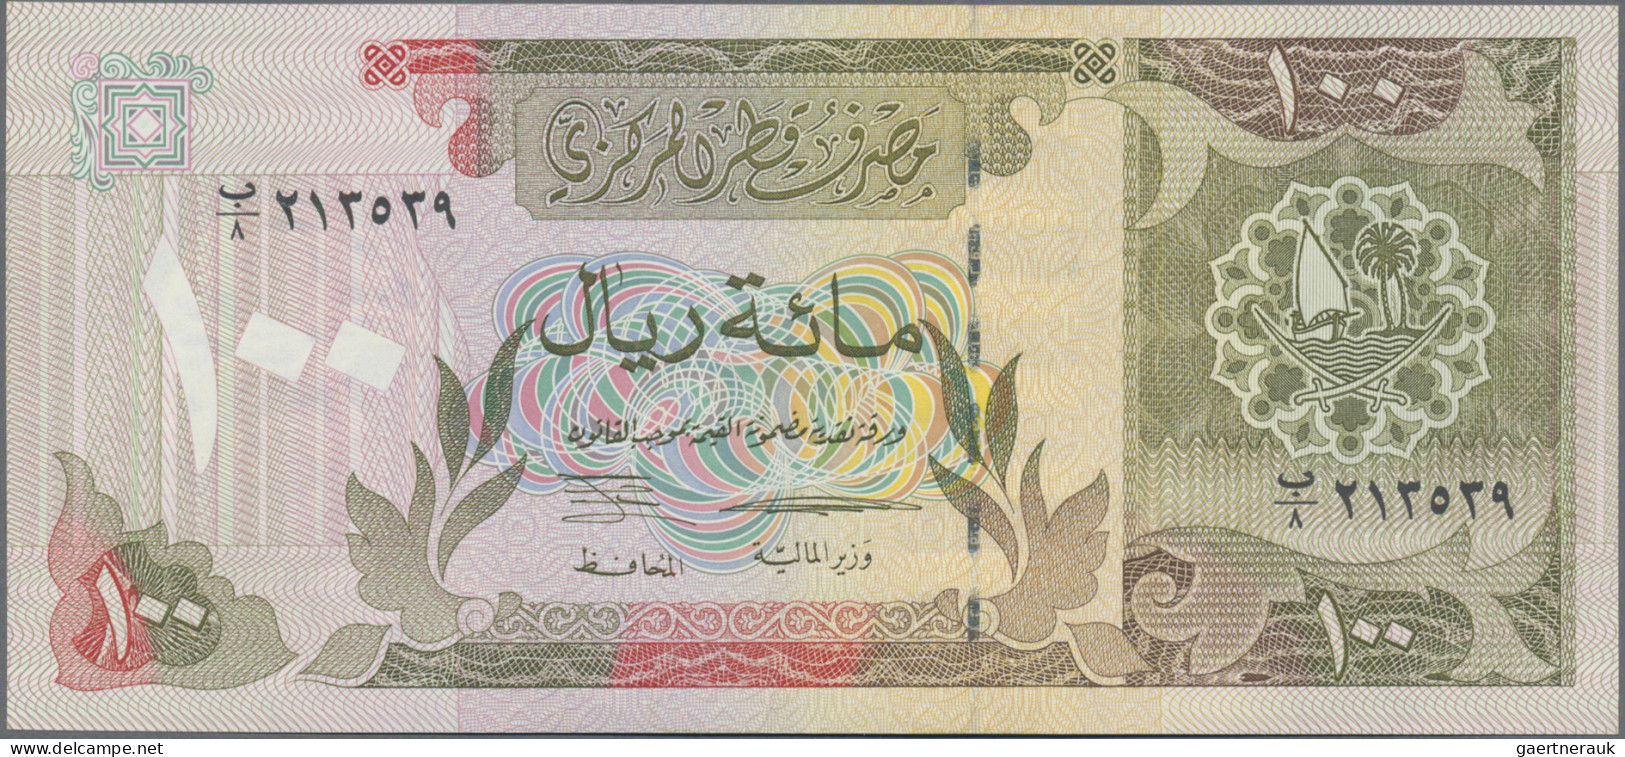 Quatar: Qatar Central Bank 100 Rials ND (1996) P. 18 In Great Crisp Condition Wi - Qatar